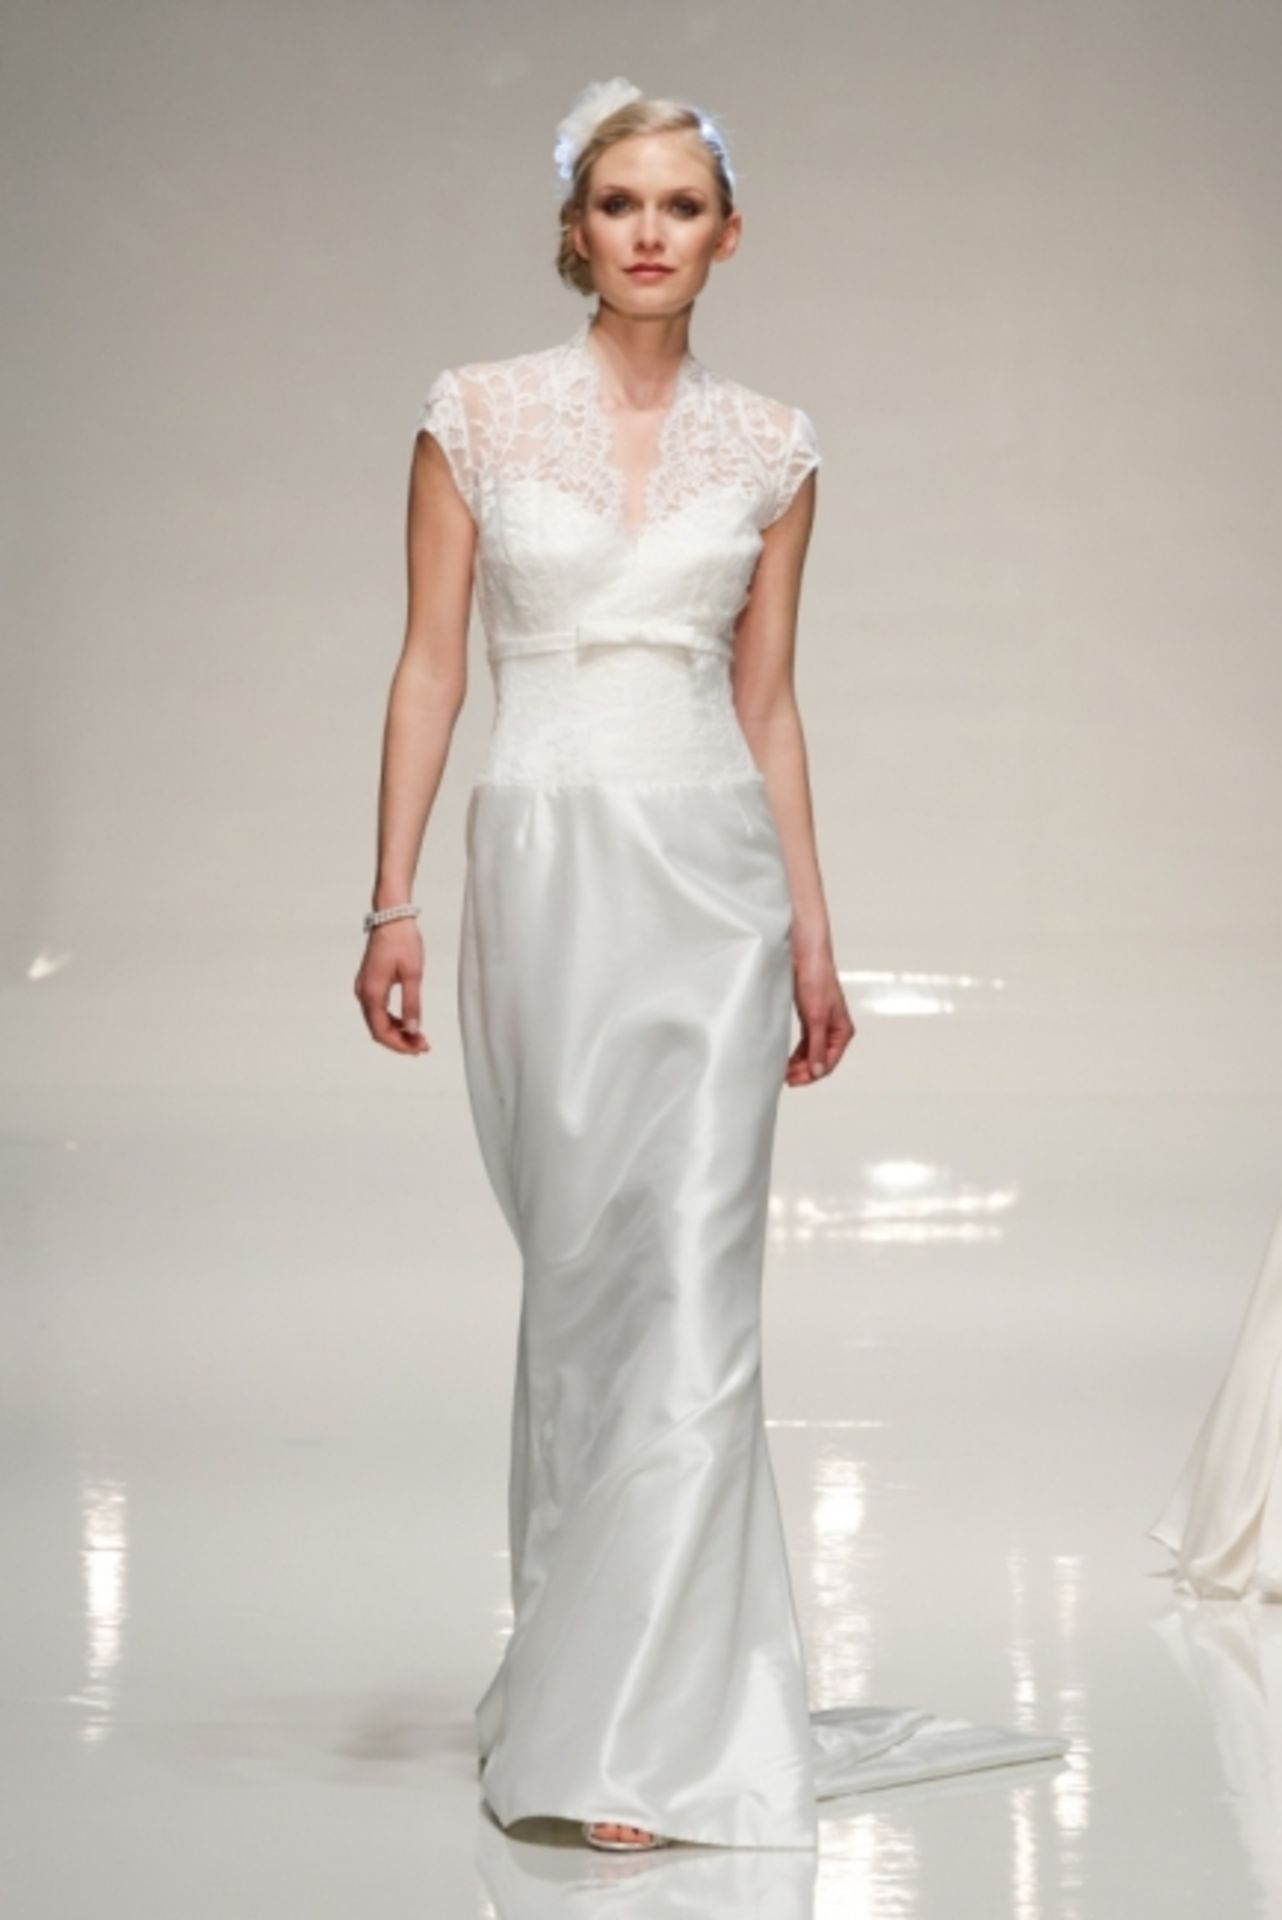 1 x ALAN HANNAH 'Estelle' Elegant Lace And Satin Fishtail Designer Wedding Dress RRP £1,200 UK 12 - Image 10 of 10